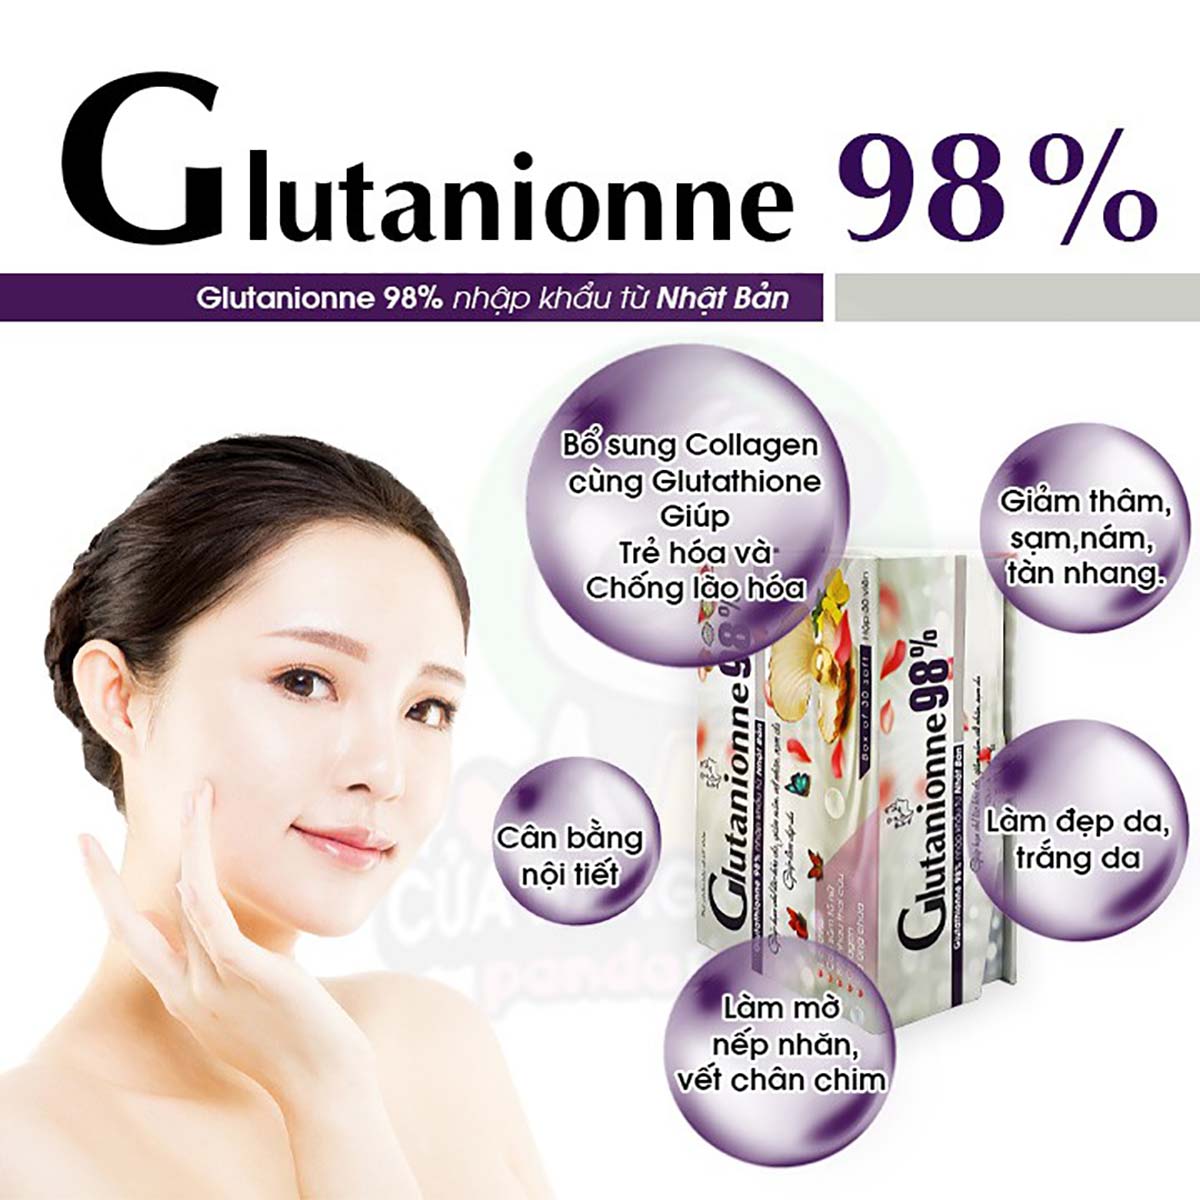 Glutanionne 98%